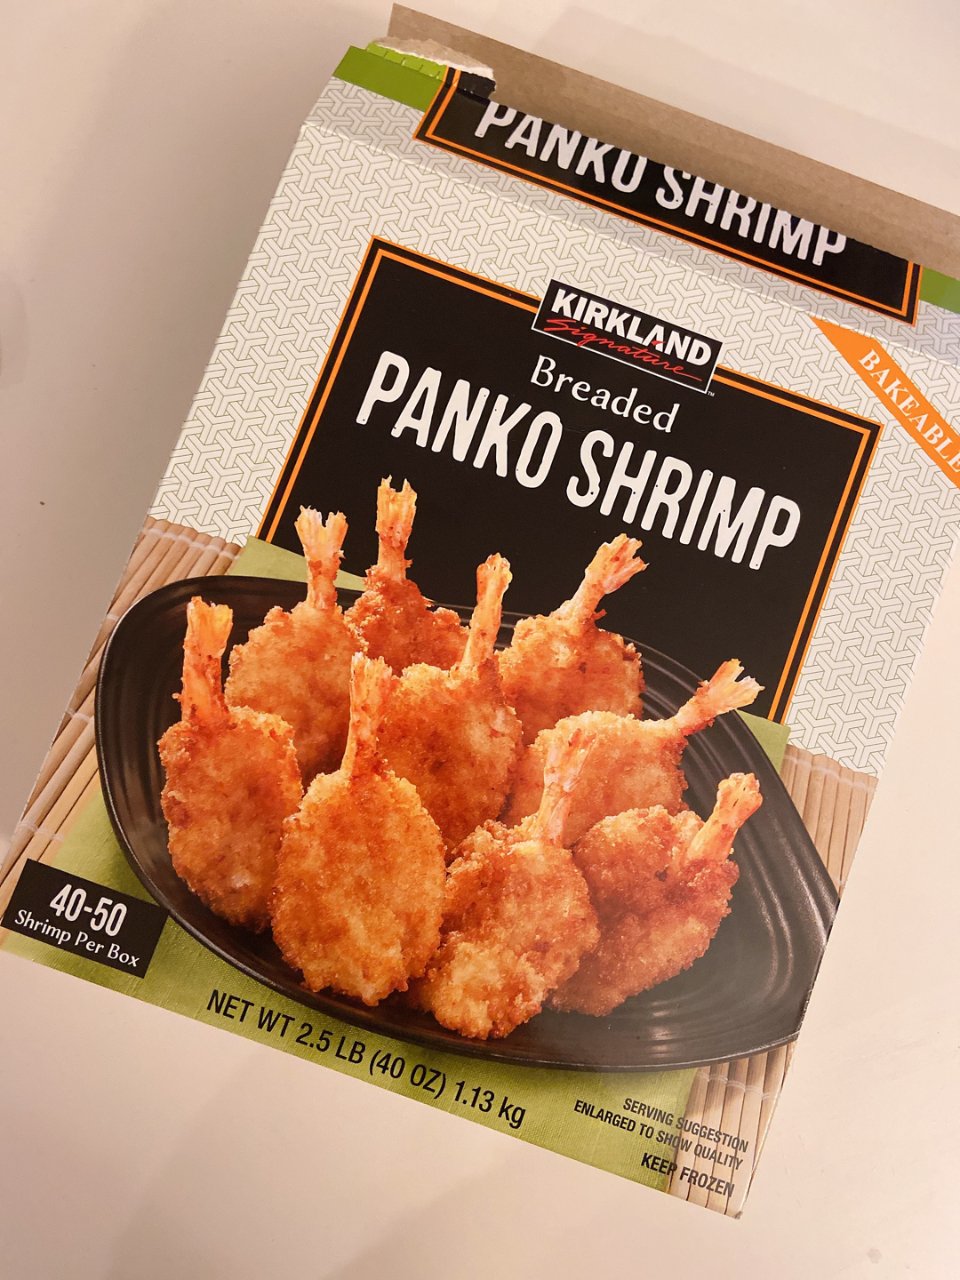 costco panko shrimp ...